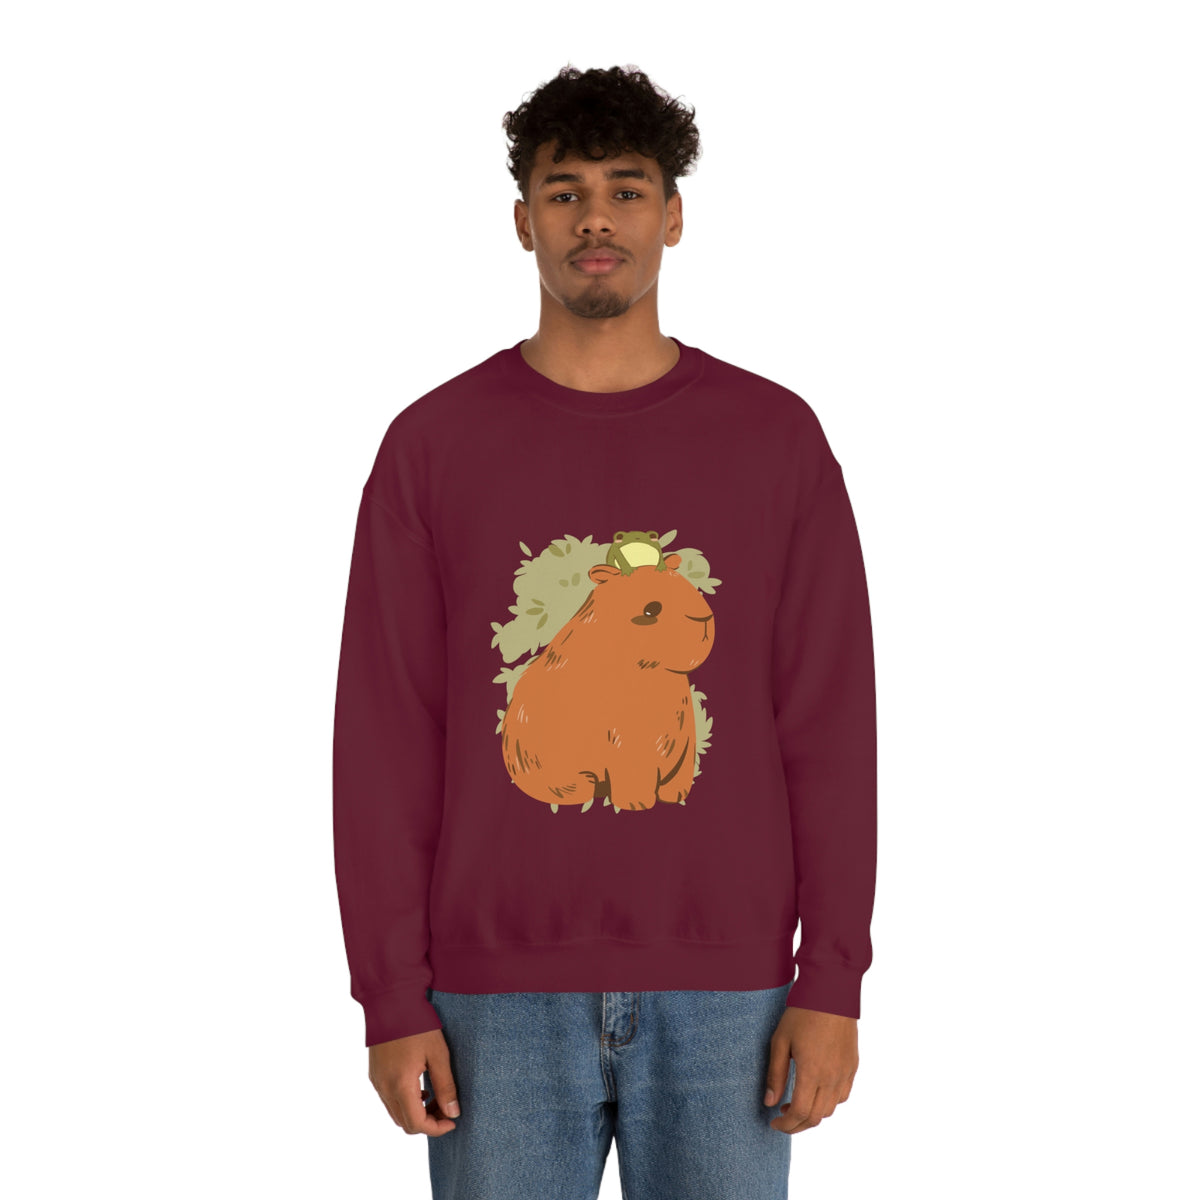 Capybara and Frog - Unisex Sweatshirt